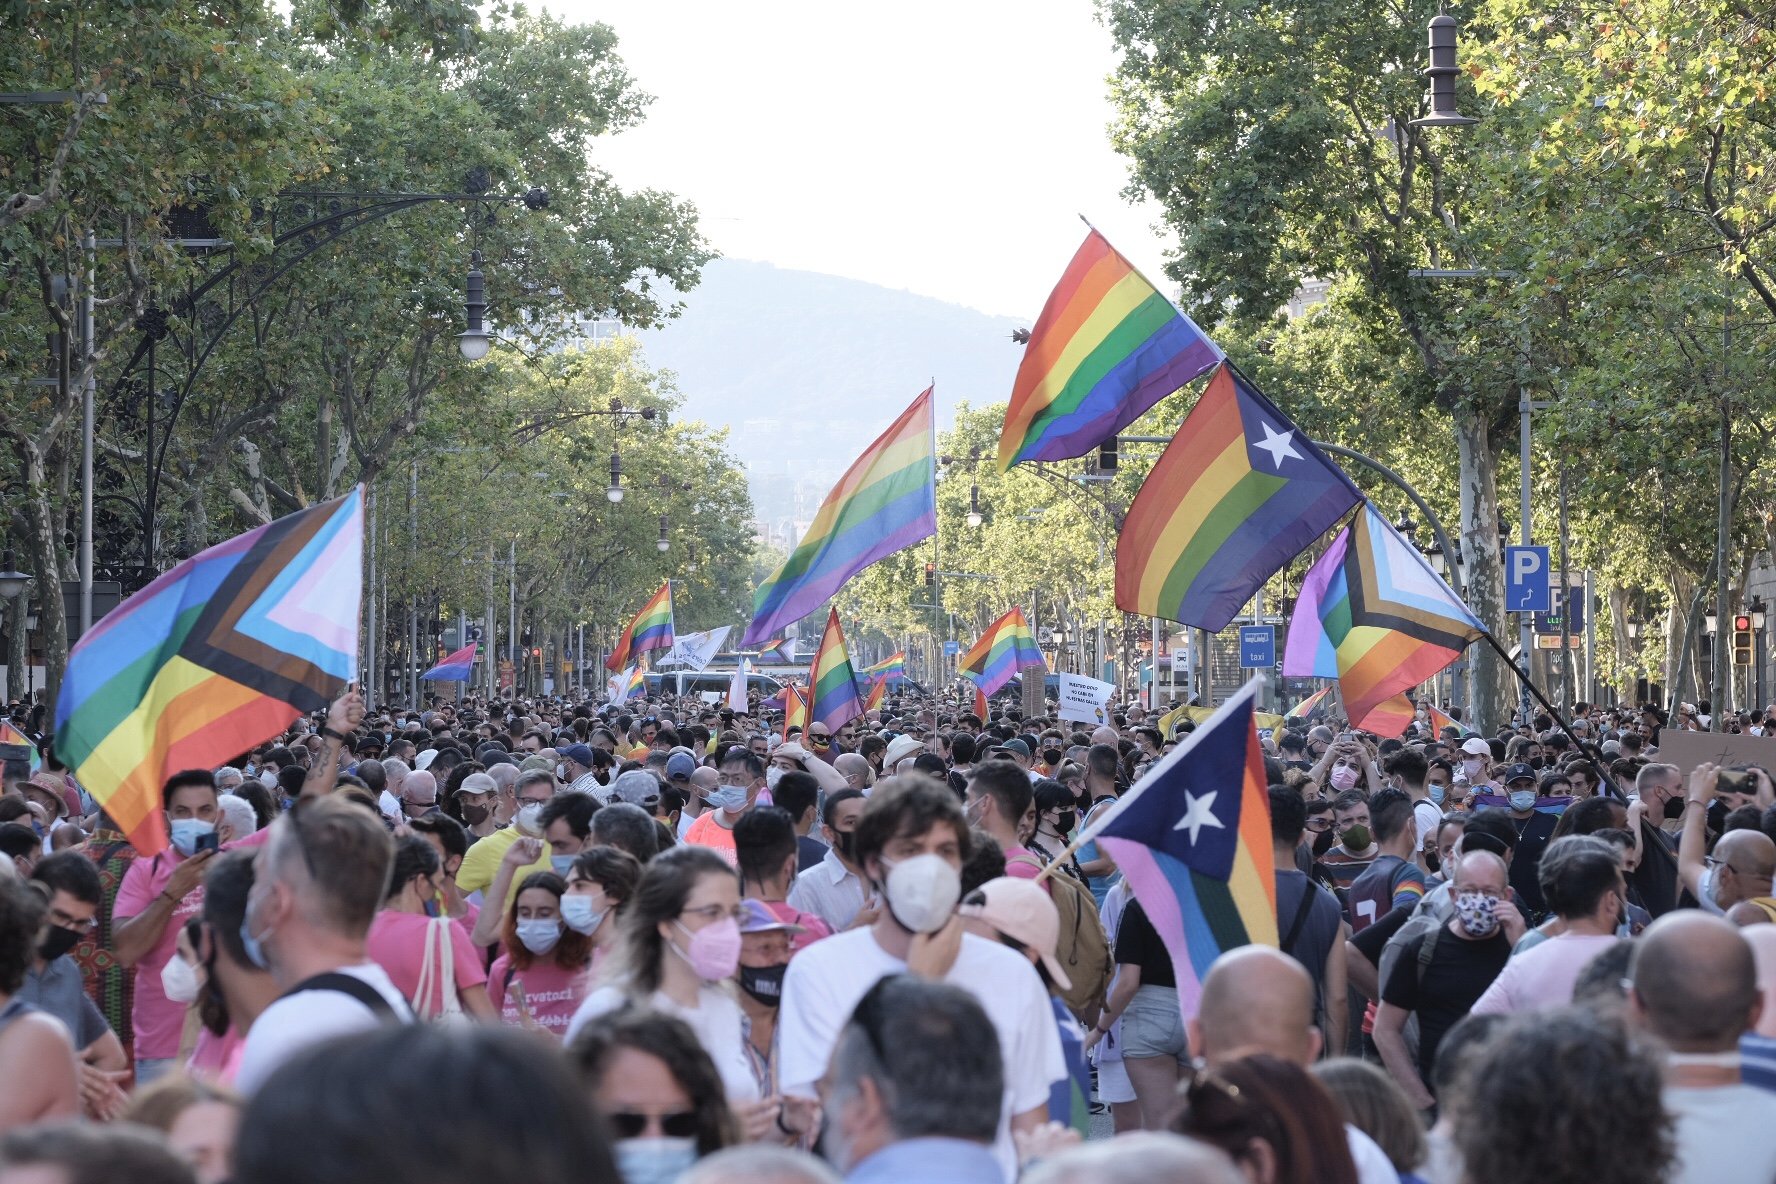 Clam multitudinari contra l'LGTBI-fòbia a Barcelona: "Prou agressions!"